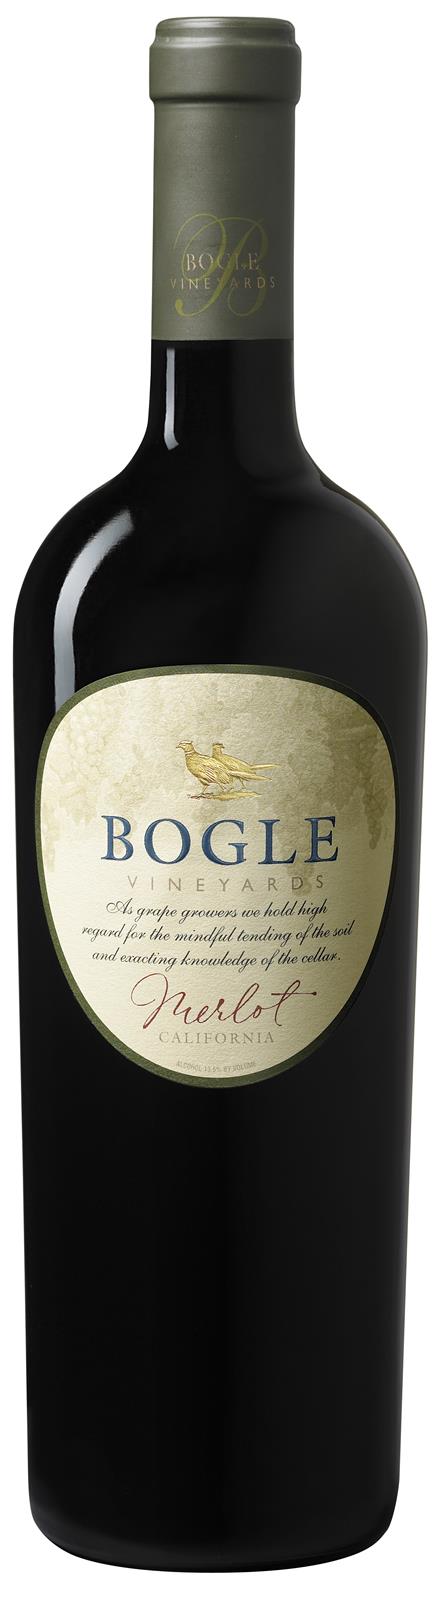 Bogle Vineyards Merlot 2017 (California)